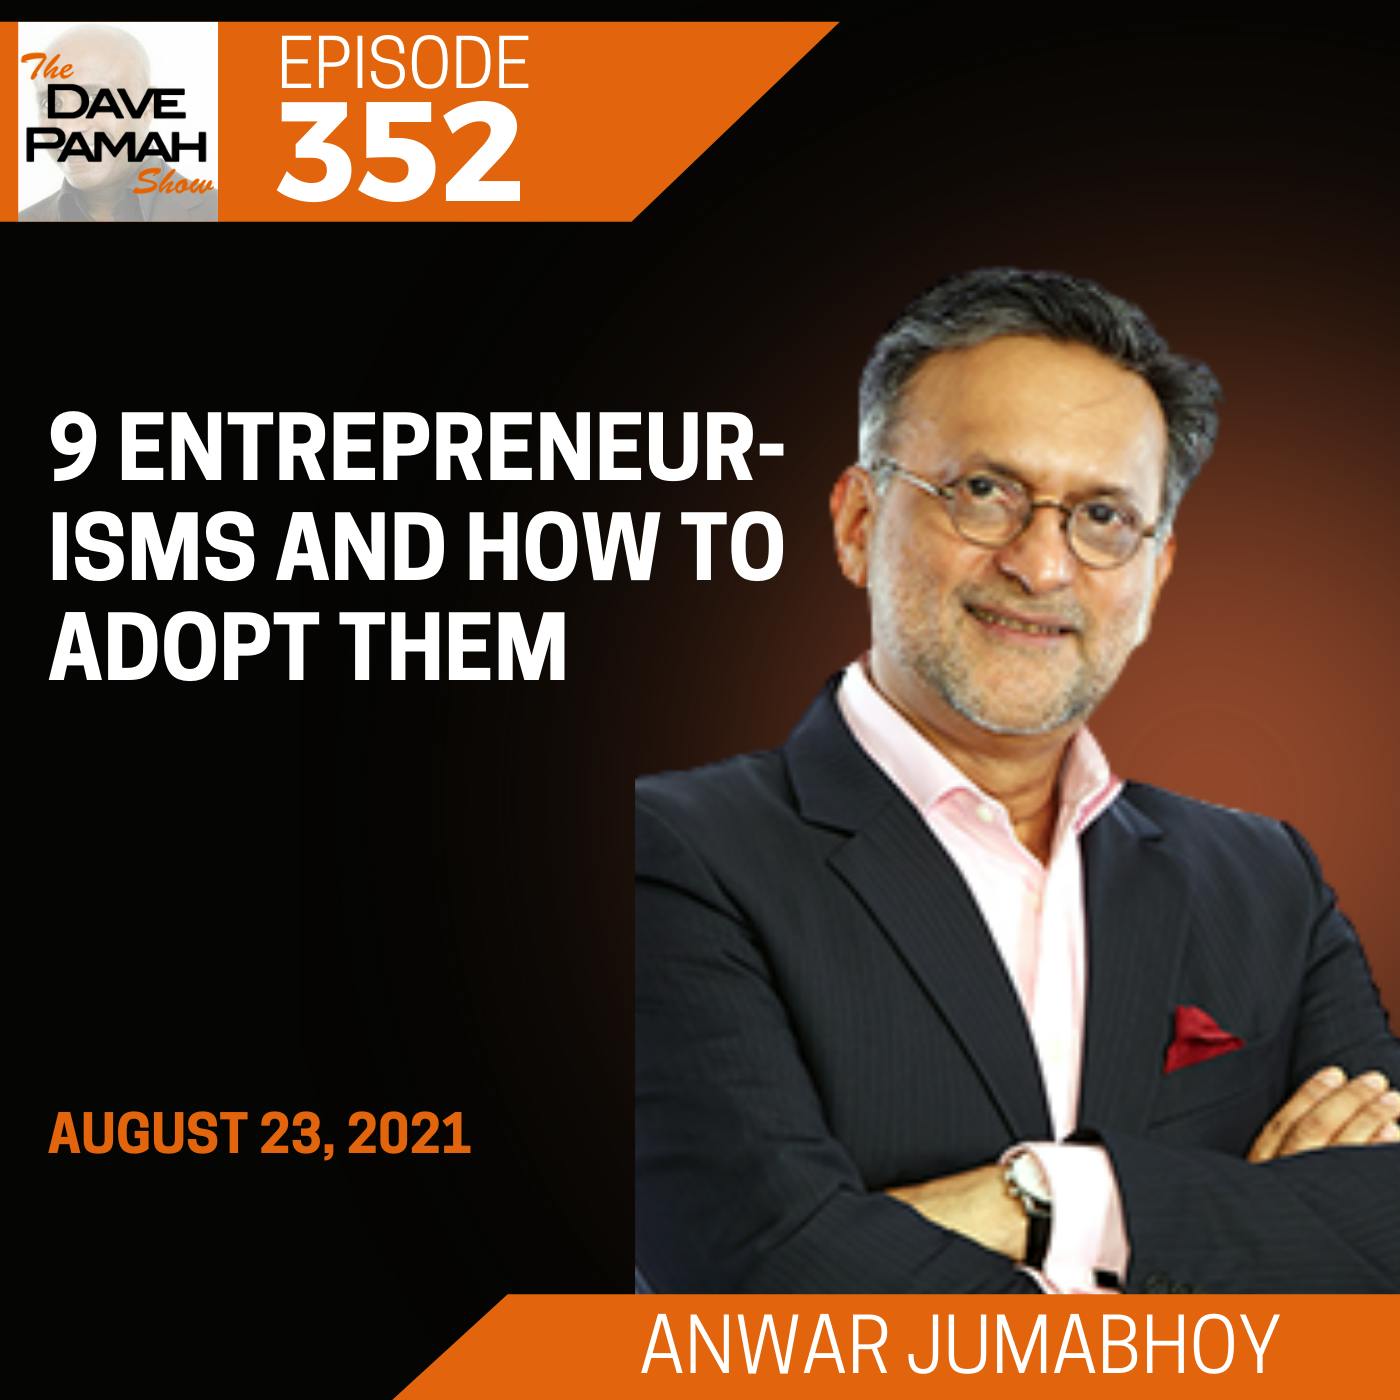 9 Entrepreneurisms and how to adopt themAnwar Jumabhoy